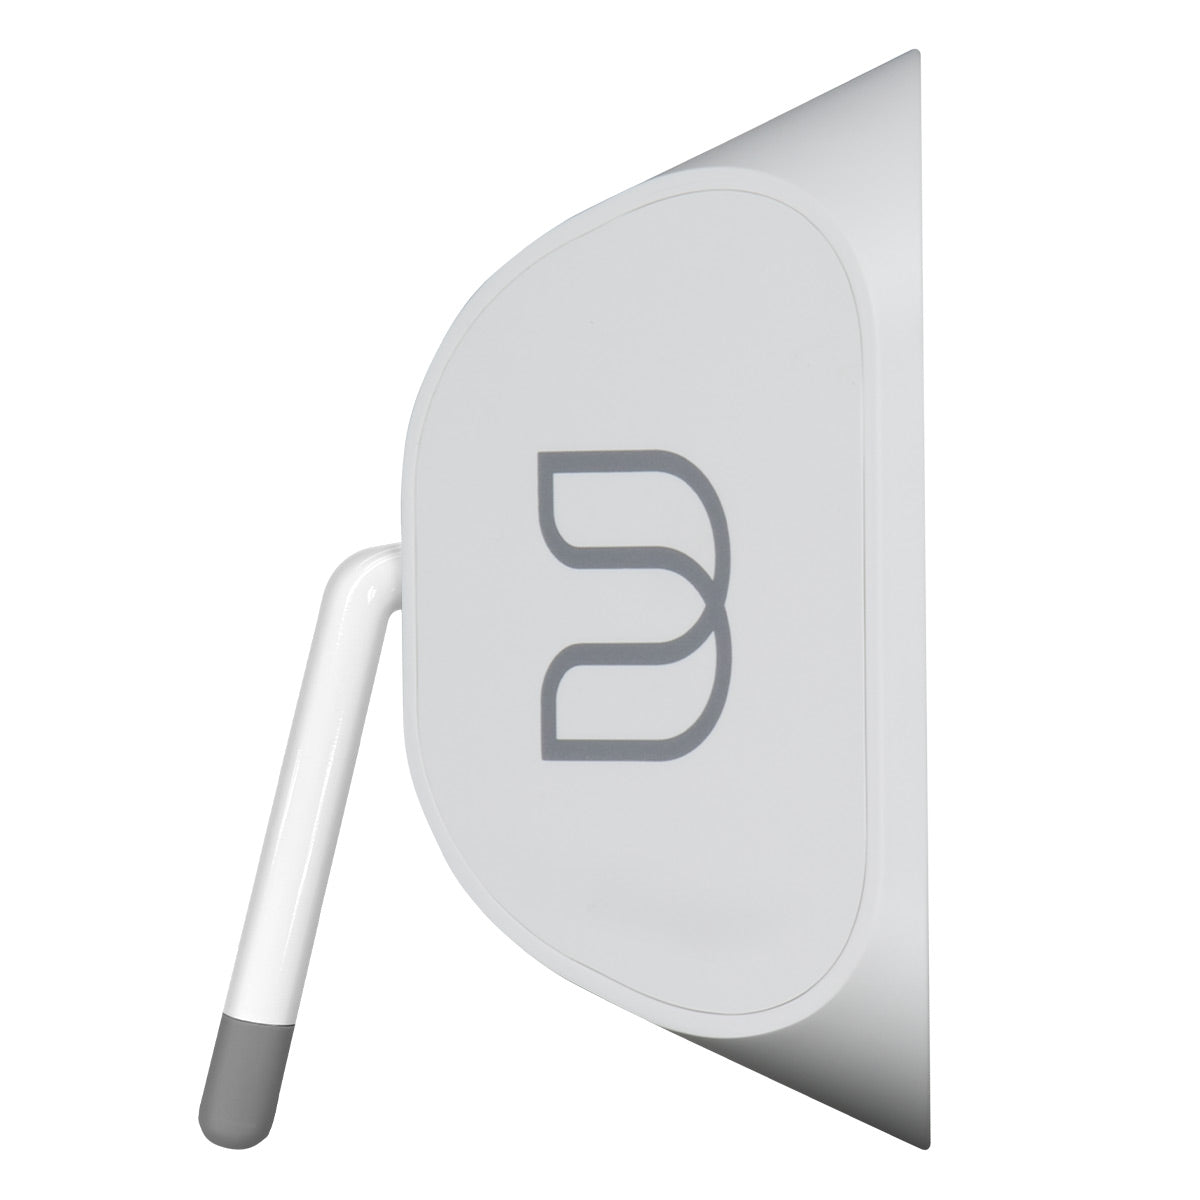 Bluesound Pulse Soundbar+ Wireless Soundbar with Pulse SUB+ 8" Wireless Powered Subwoofer (White)